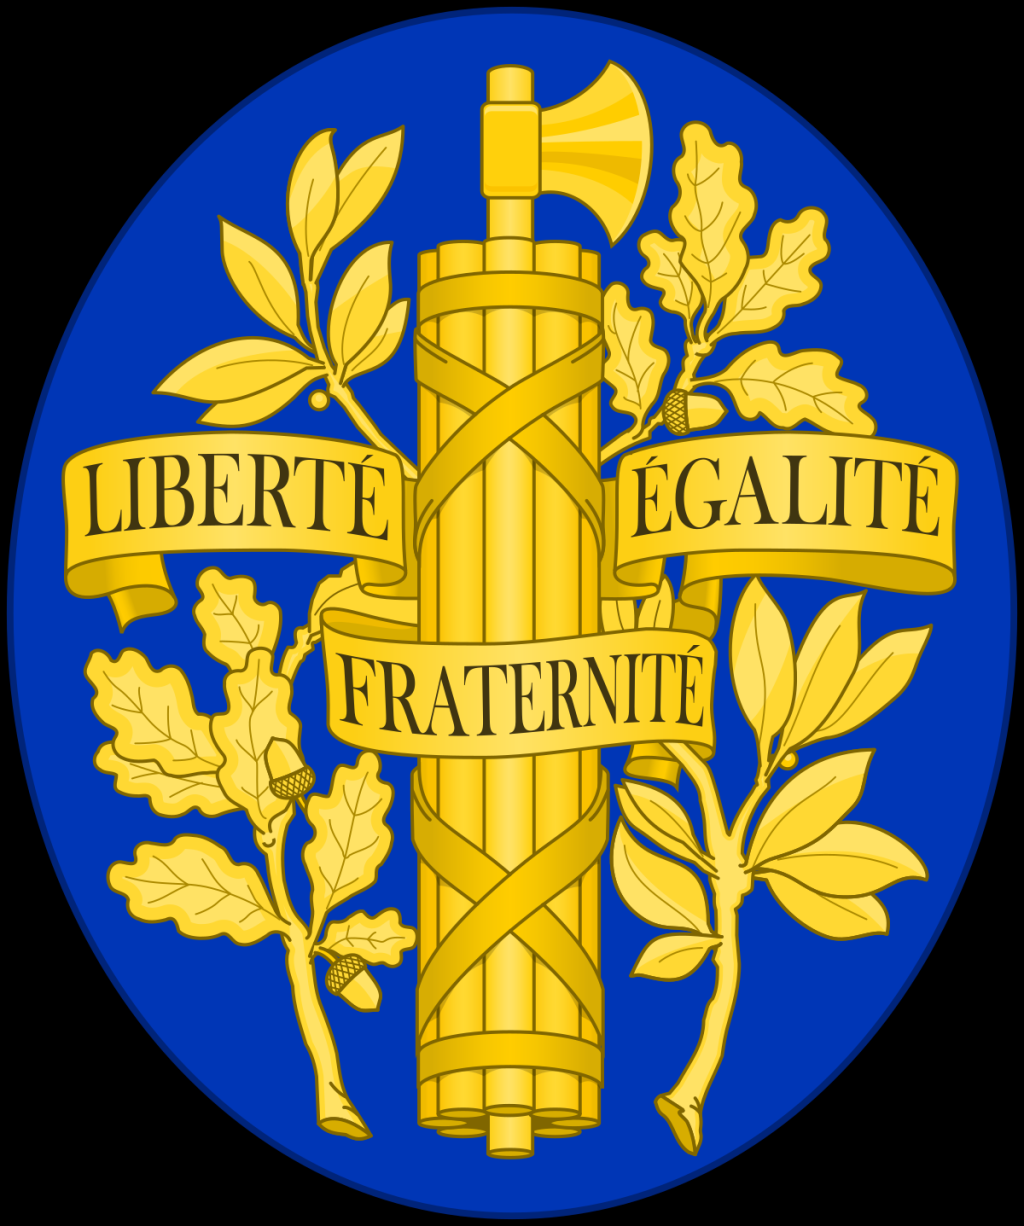 france political beliefs - Politics of France - Wikipedia